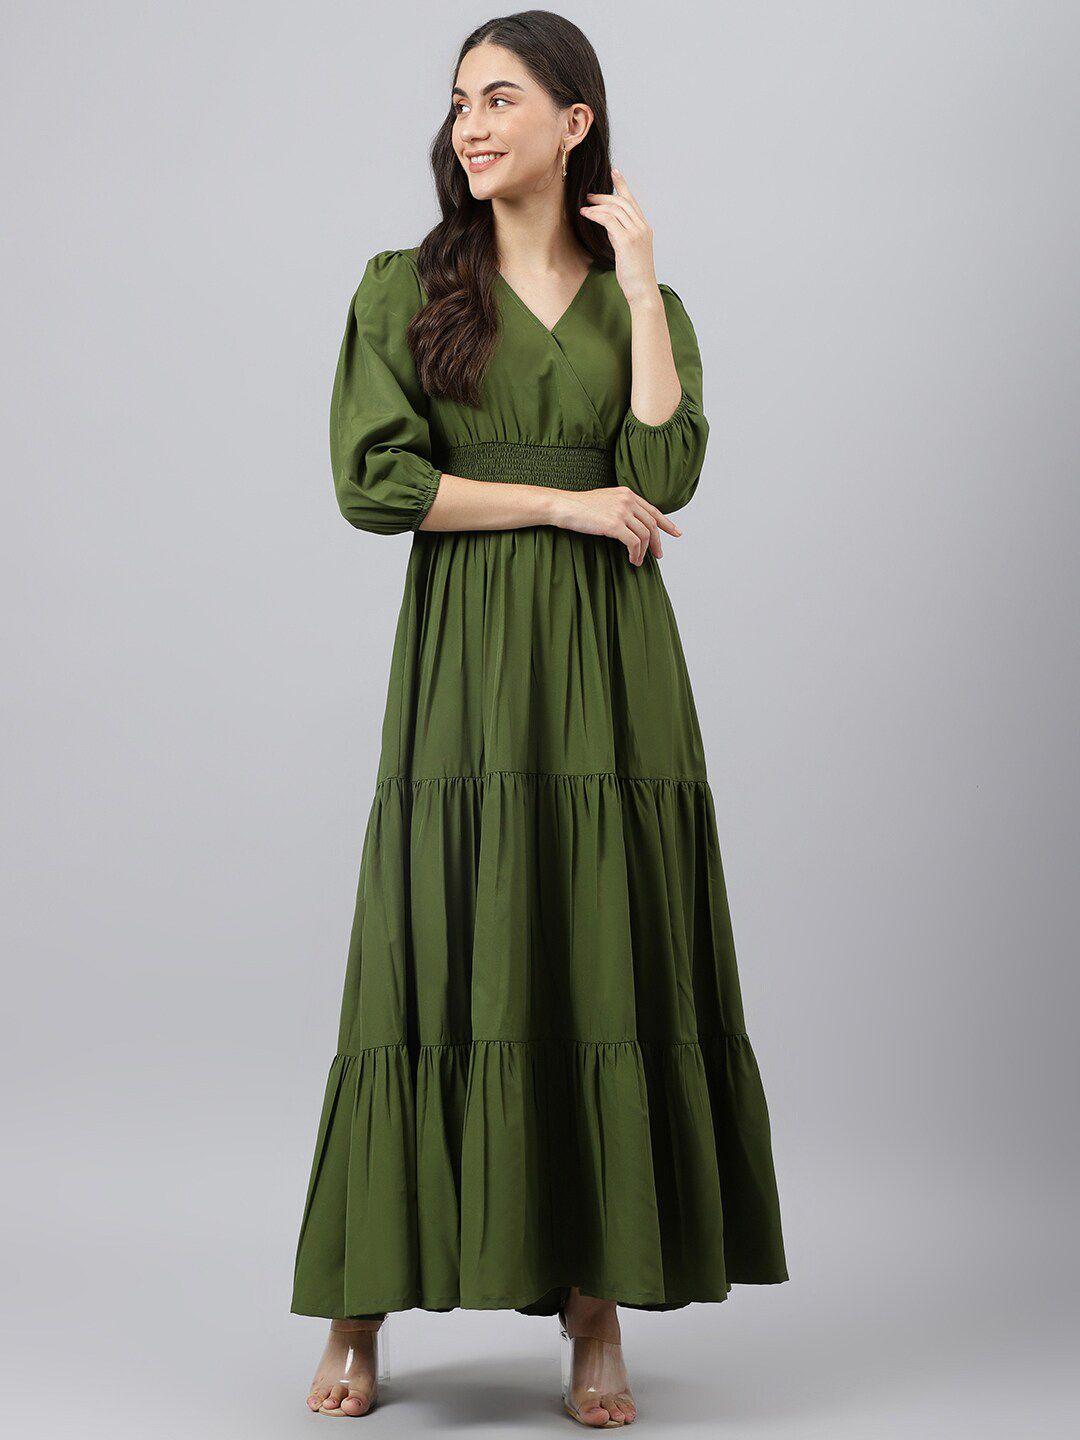 deebaco olive green tiered wrap style maxi dress